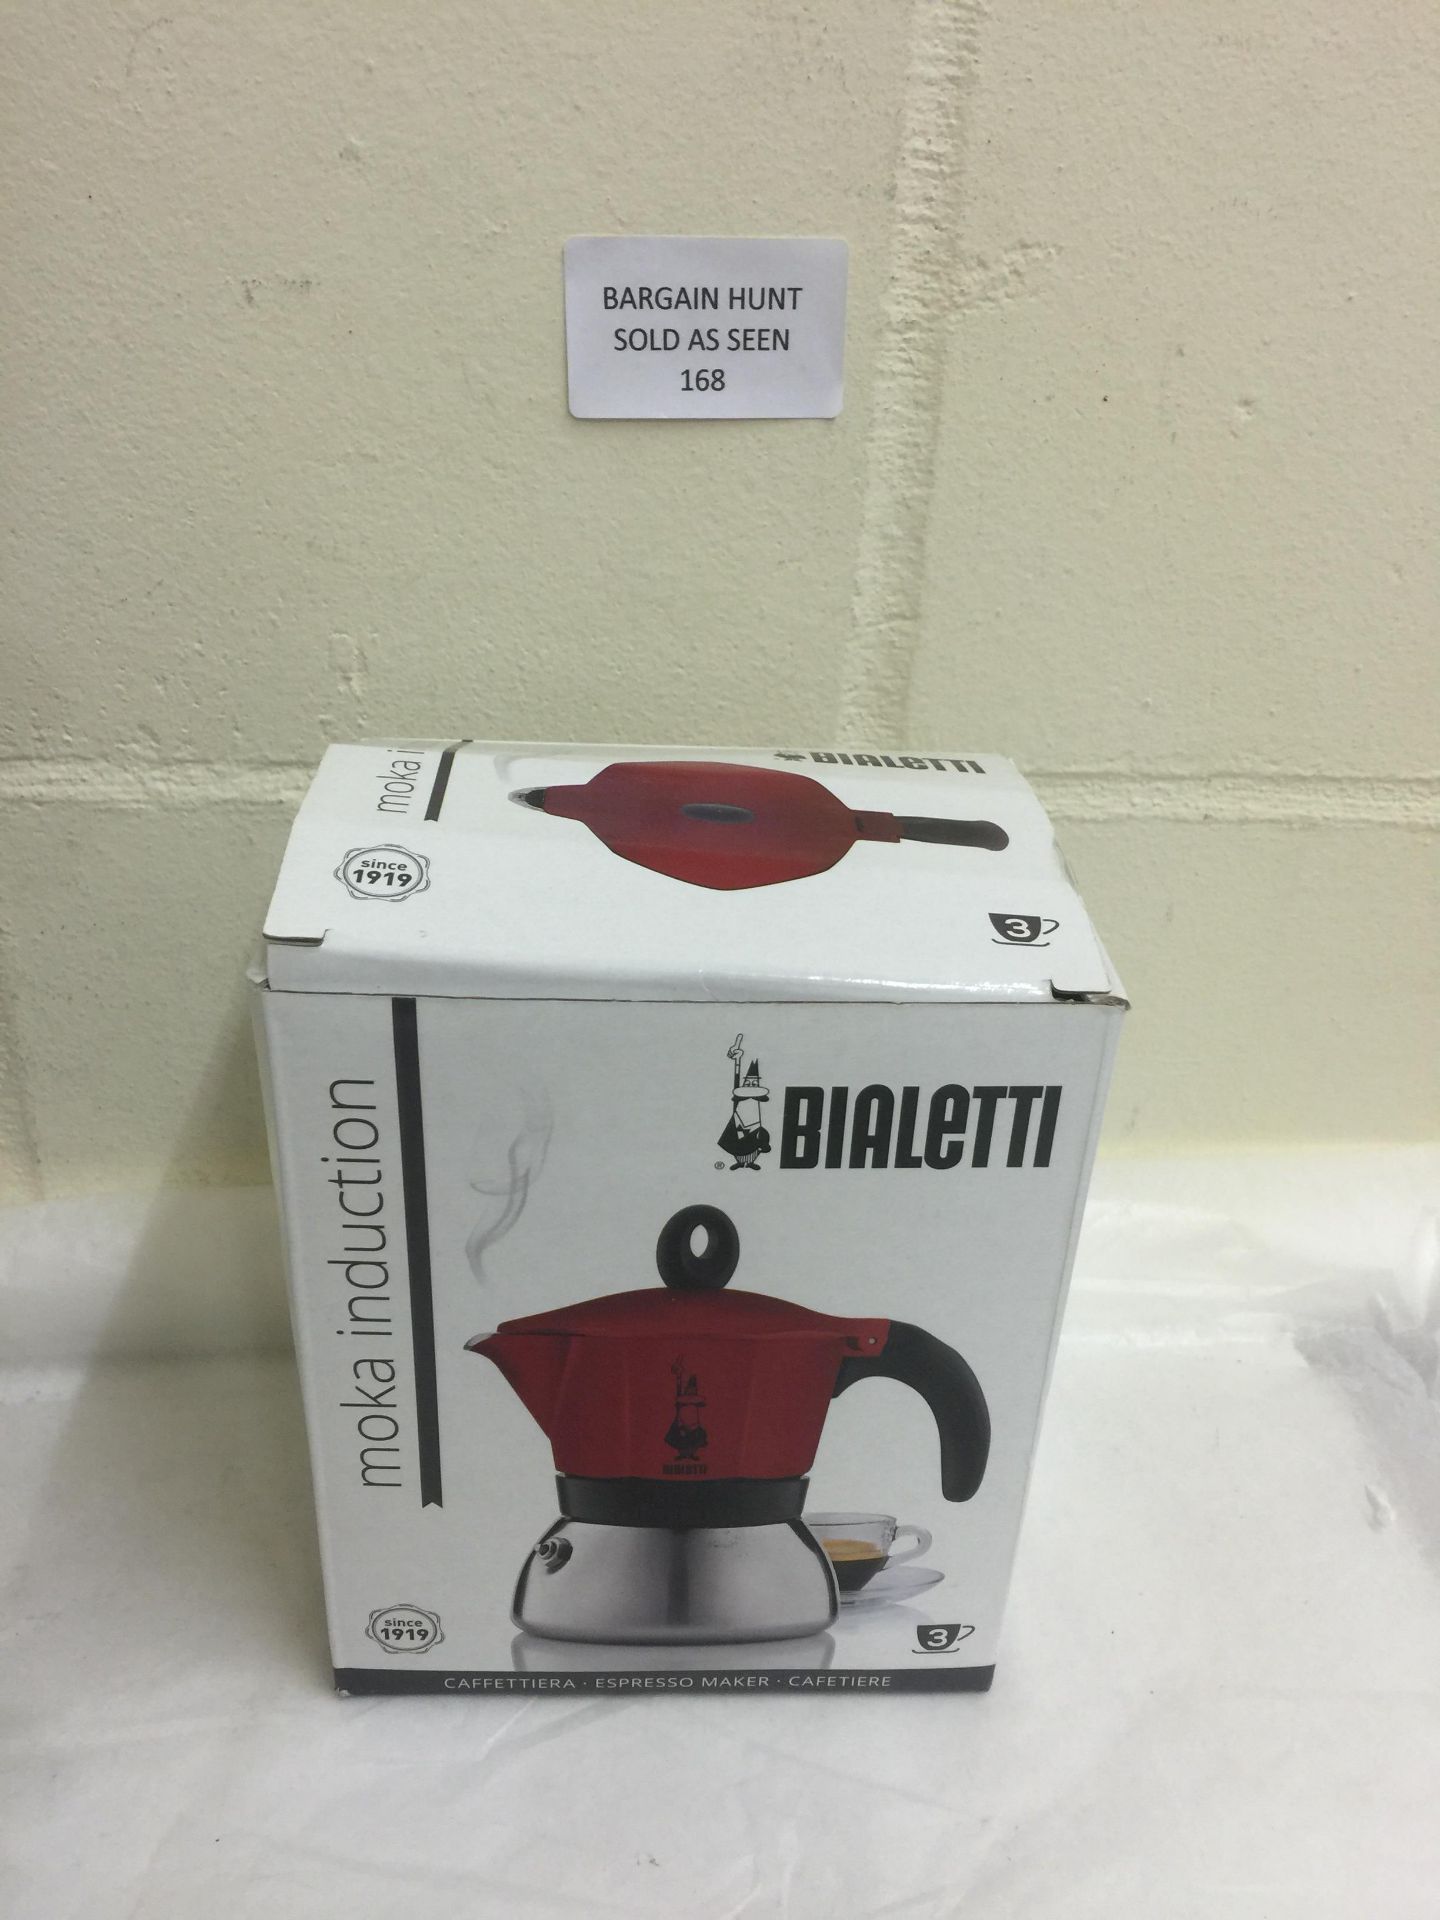 Bialetti Moka Induction Coffee Maker